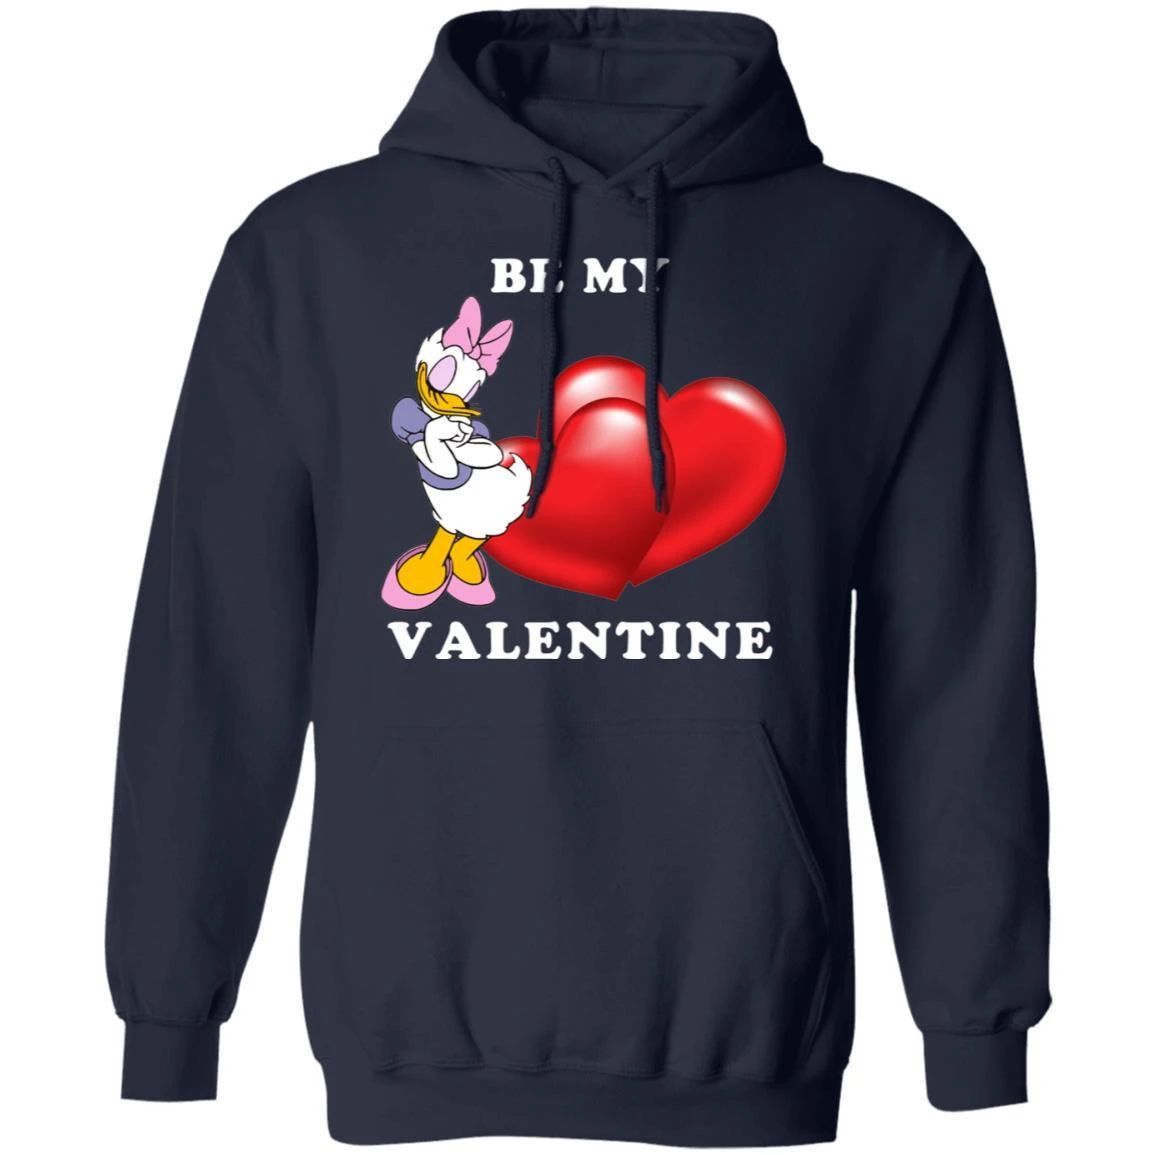 Valentine’S Hoodie Be My Valentine Daisy Duck Hoodie Lovely Gift